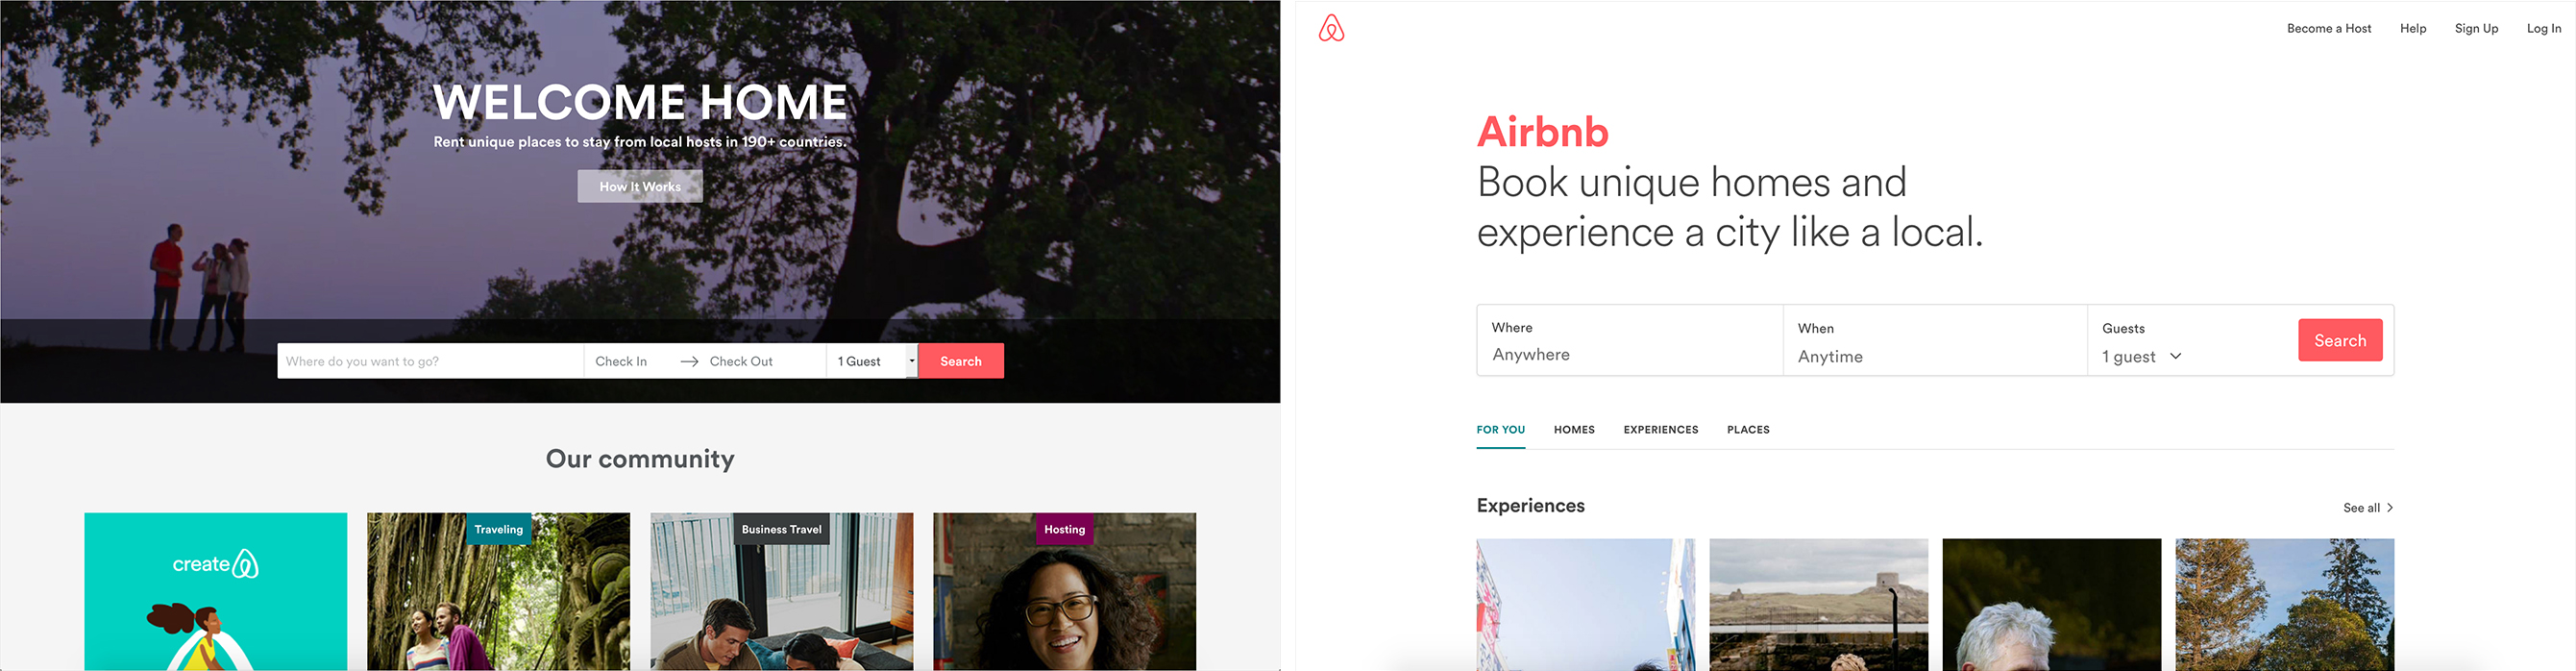 airbnb website redesign